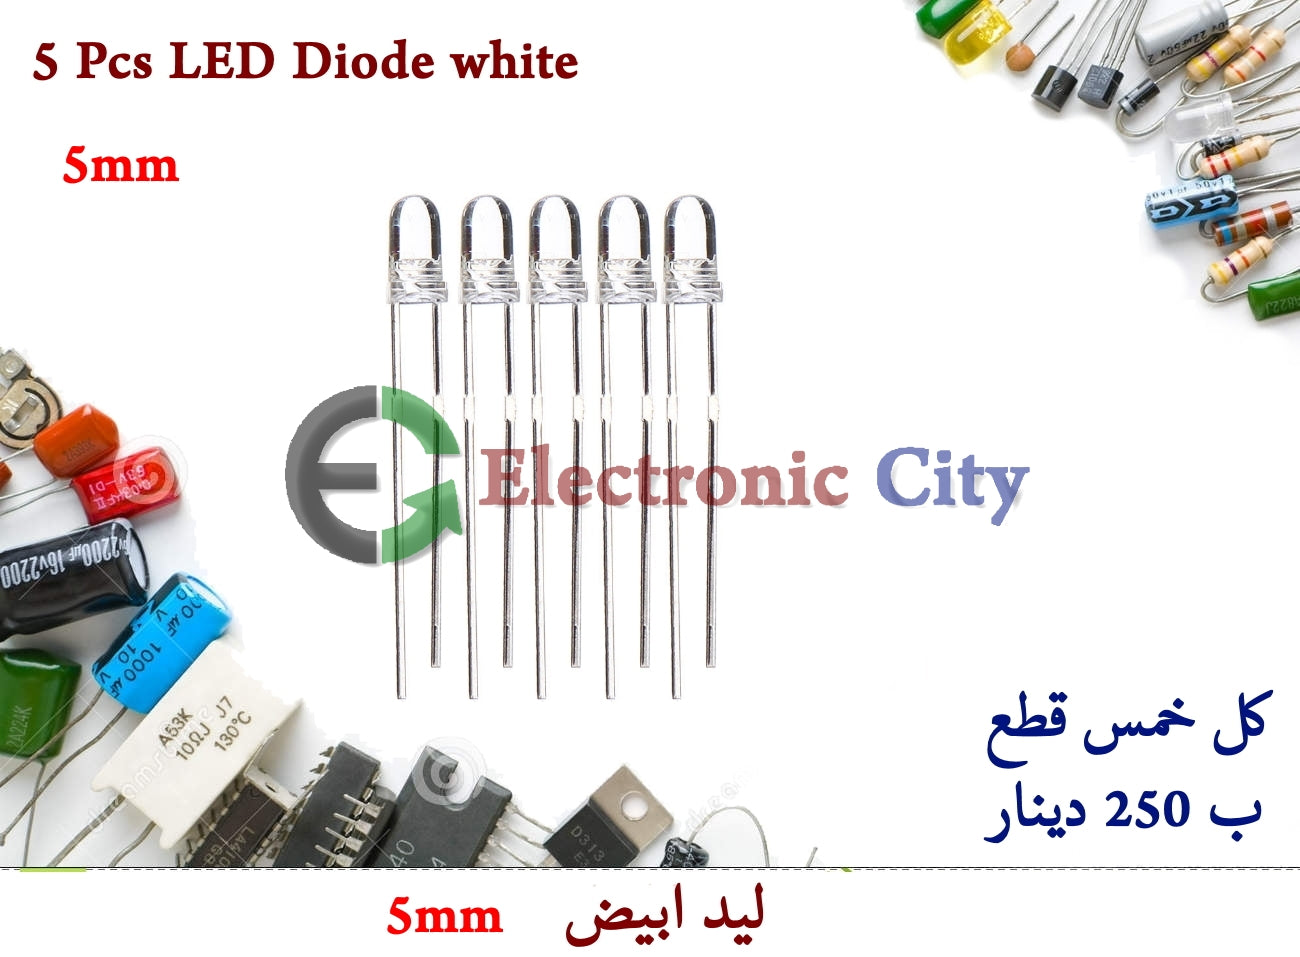 5 Pcs LED Diode white 5mm